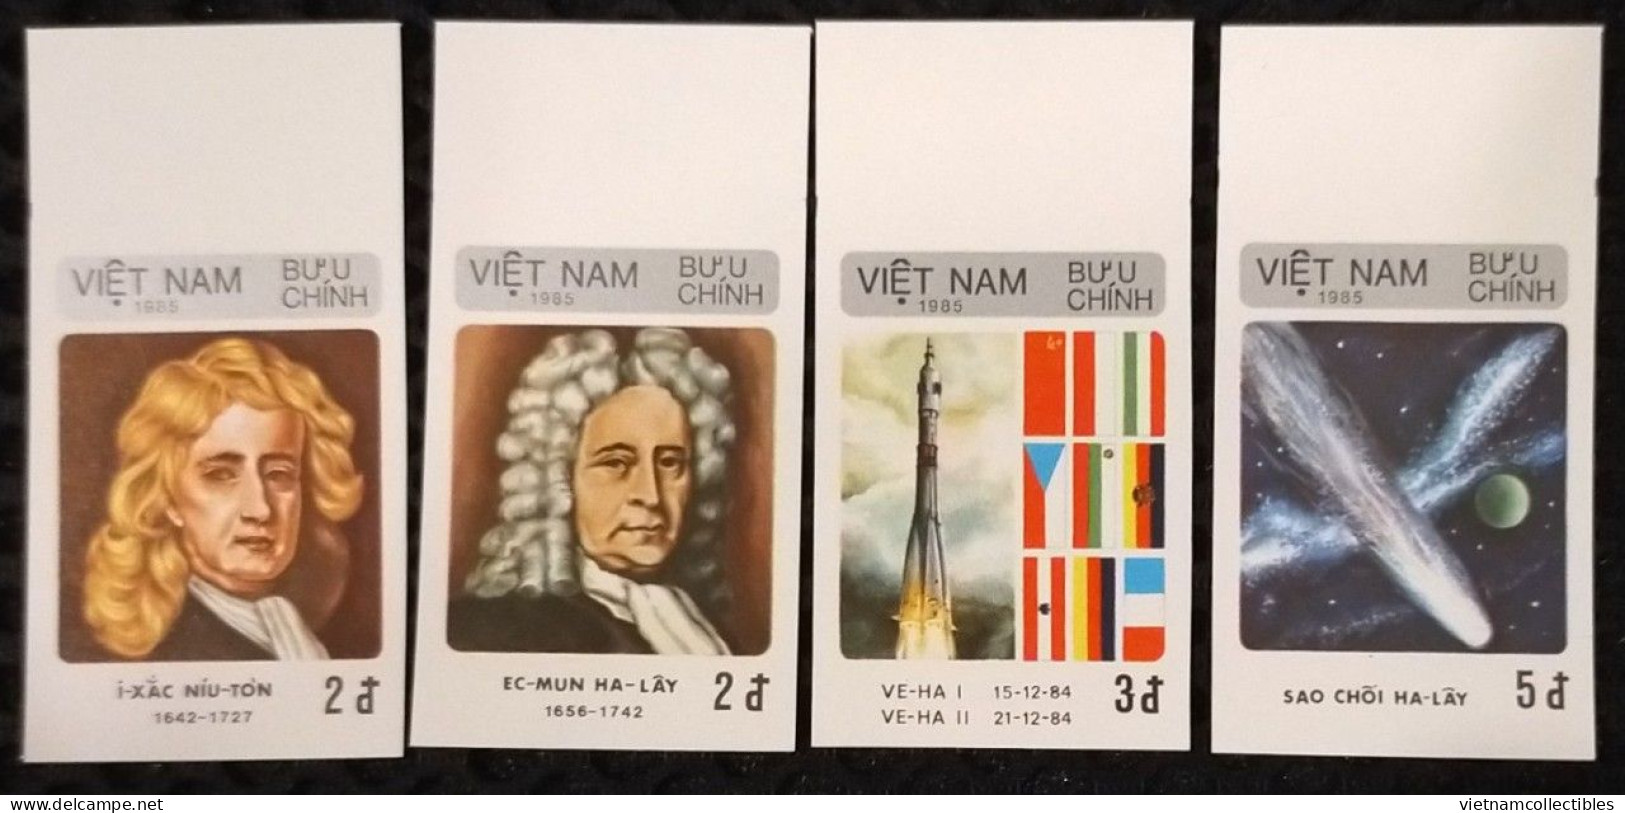 Vietnam Viet Nam MNH Imperf Stamps 1986 : Space / Newton / Halley ; Scott#1599-1602 (Ms485) - Vietnam